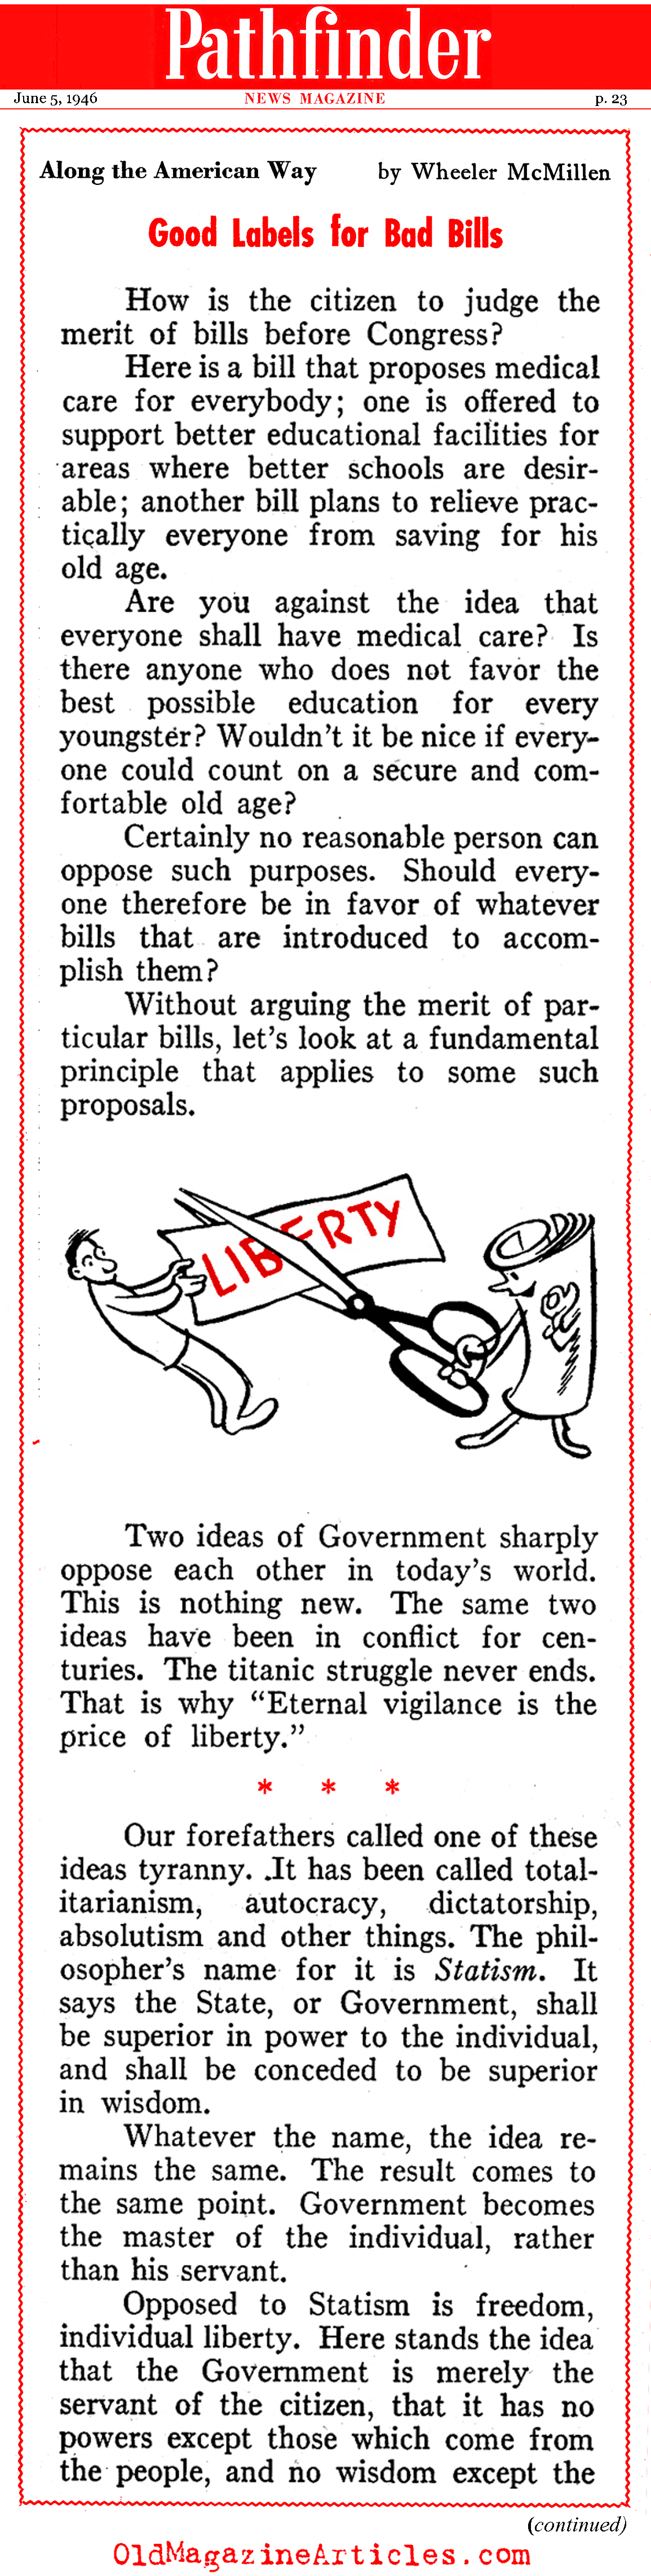 Statism (Pathfinder Magazine, 1946)